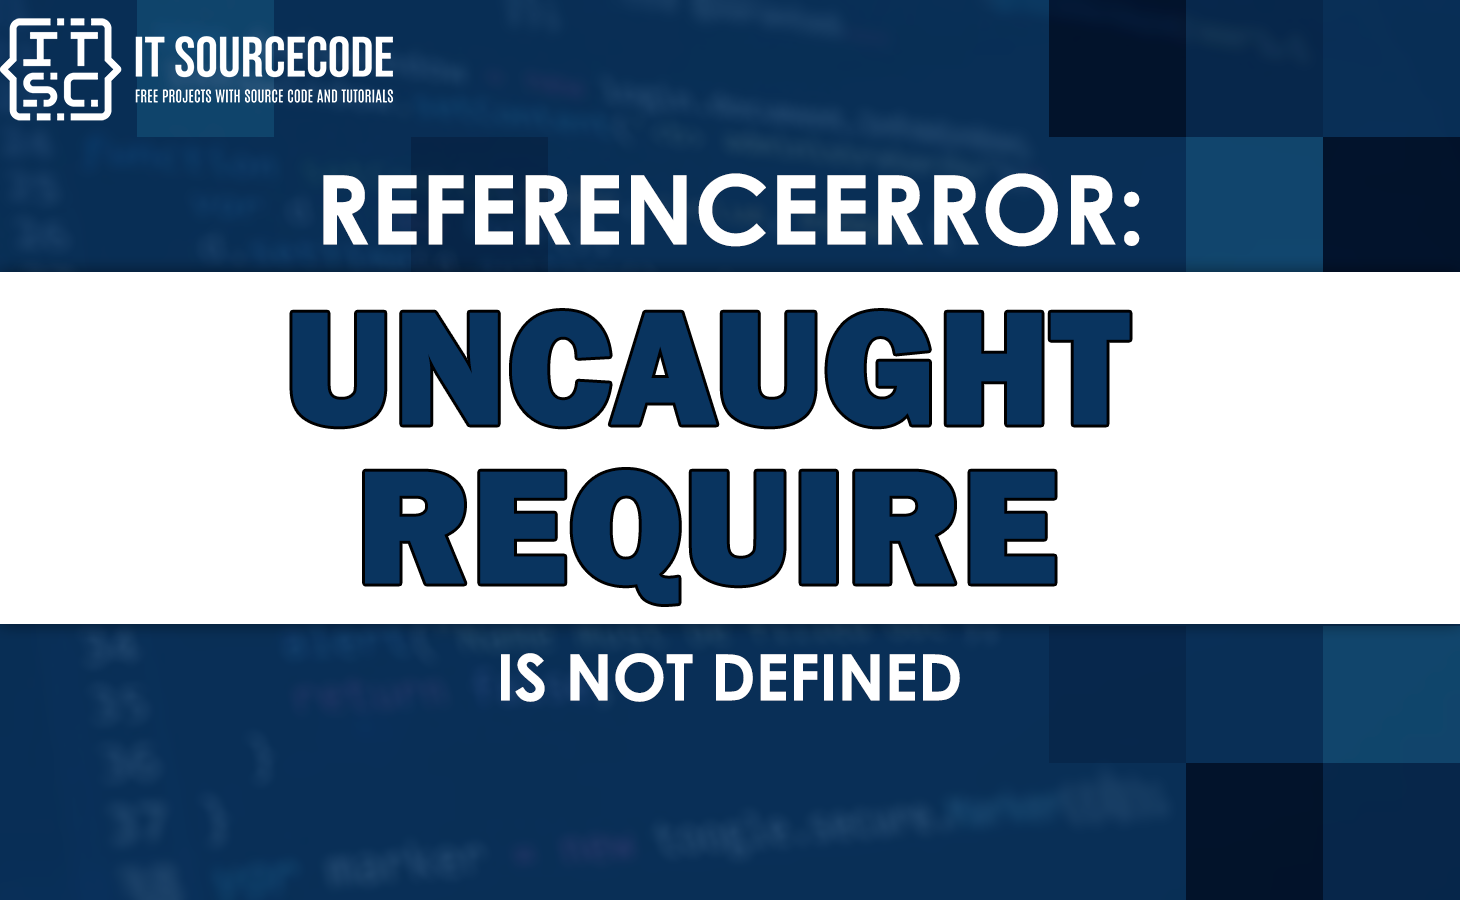 Uncaught referenceerror require is not defined